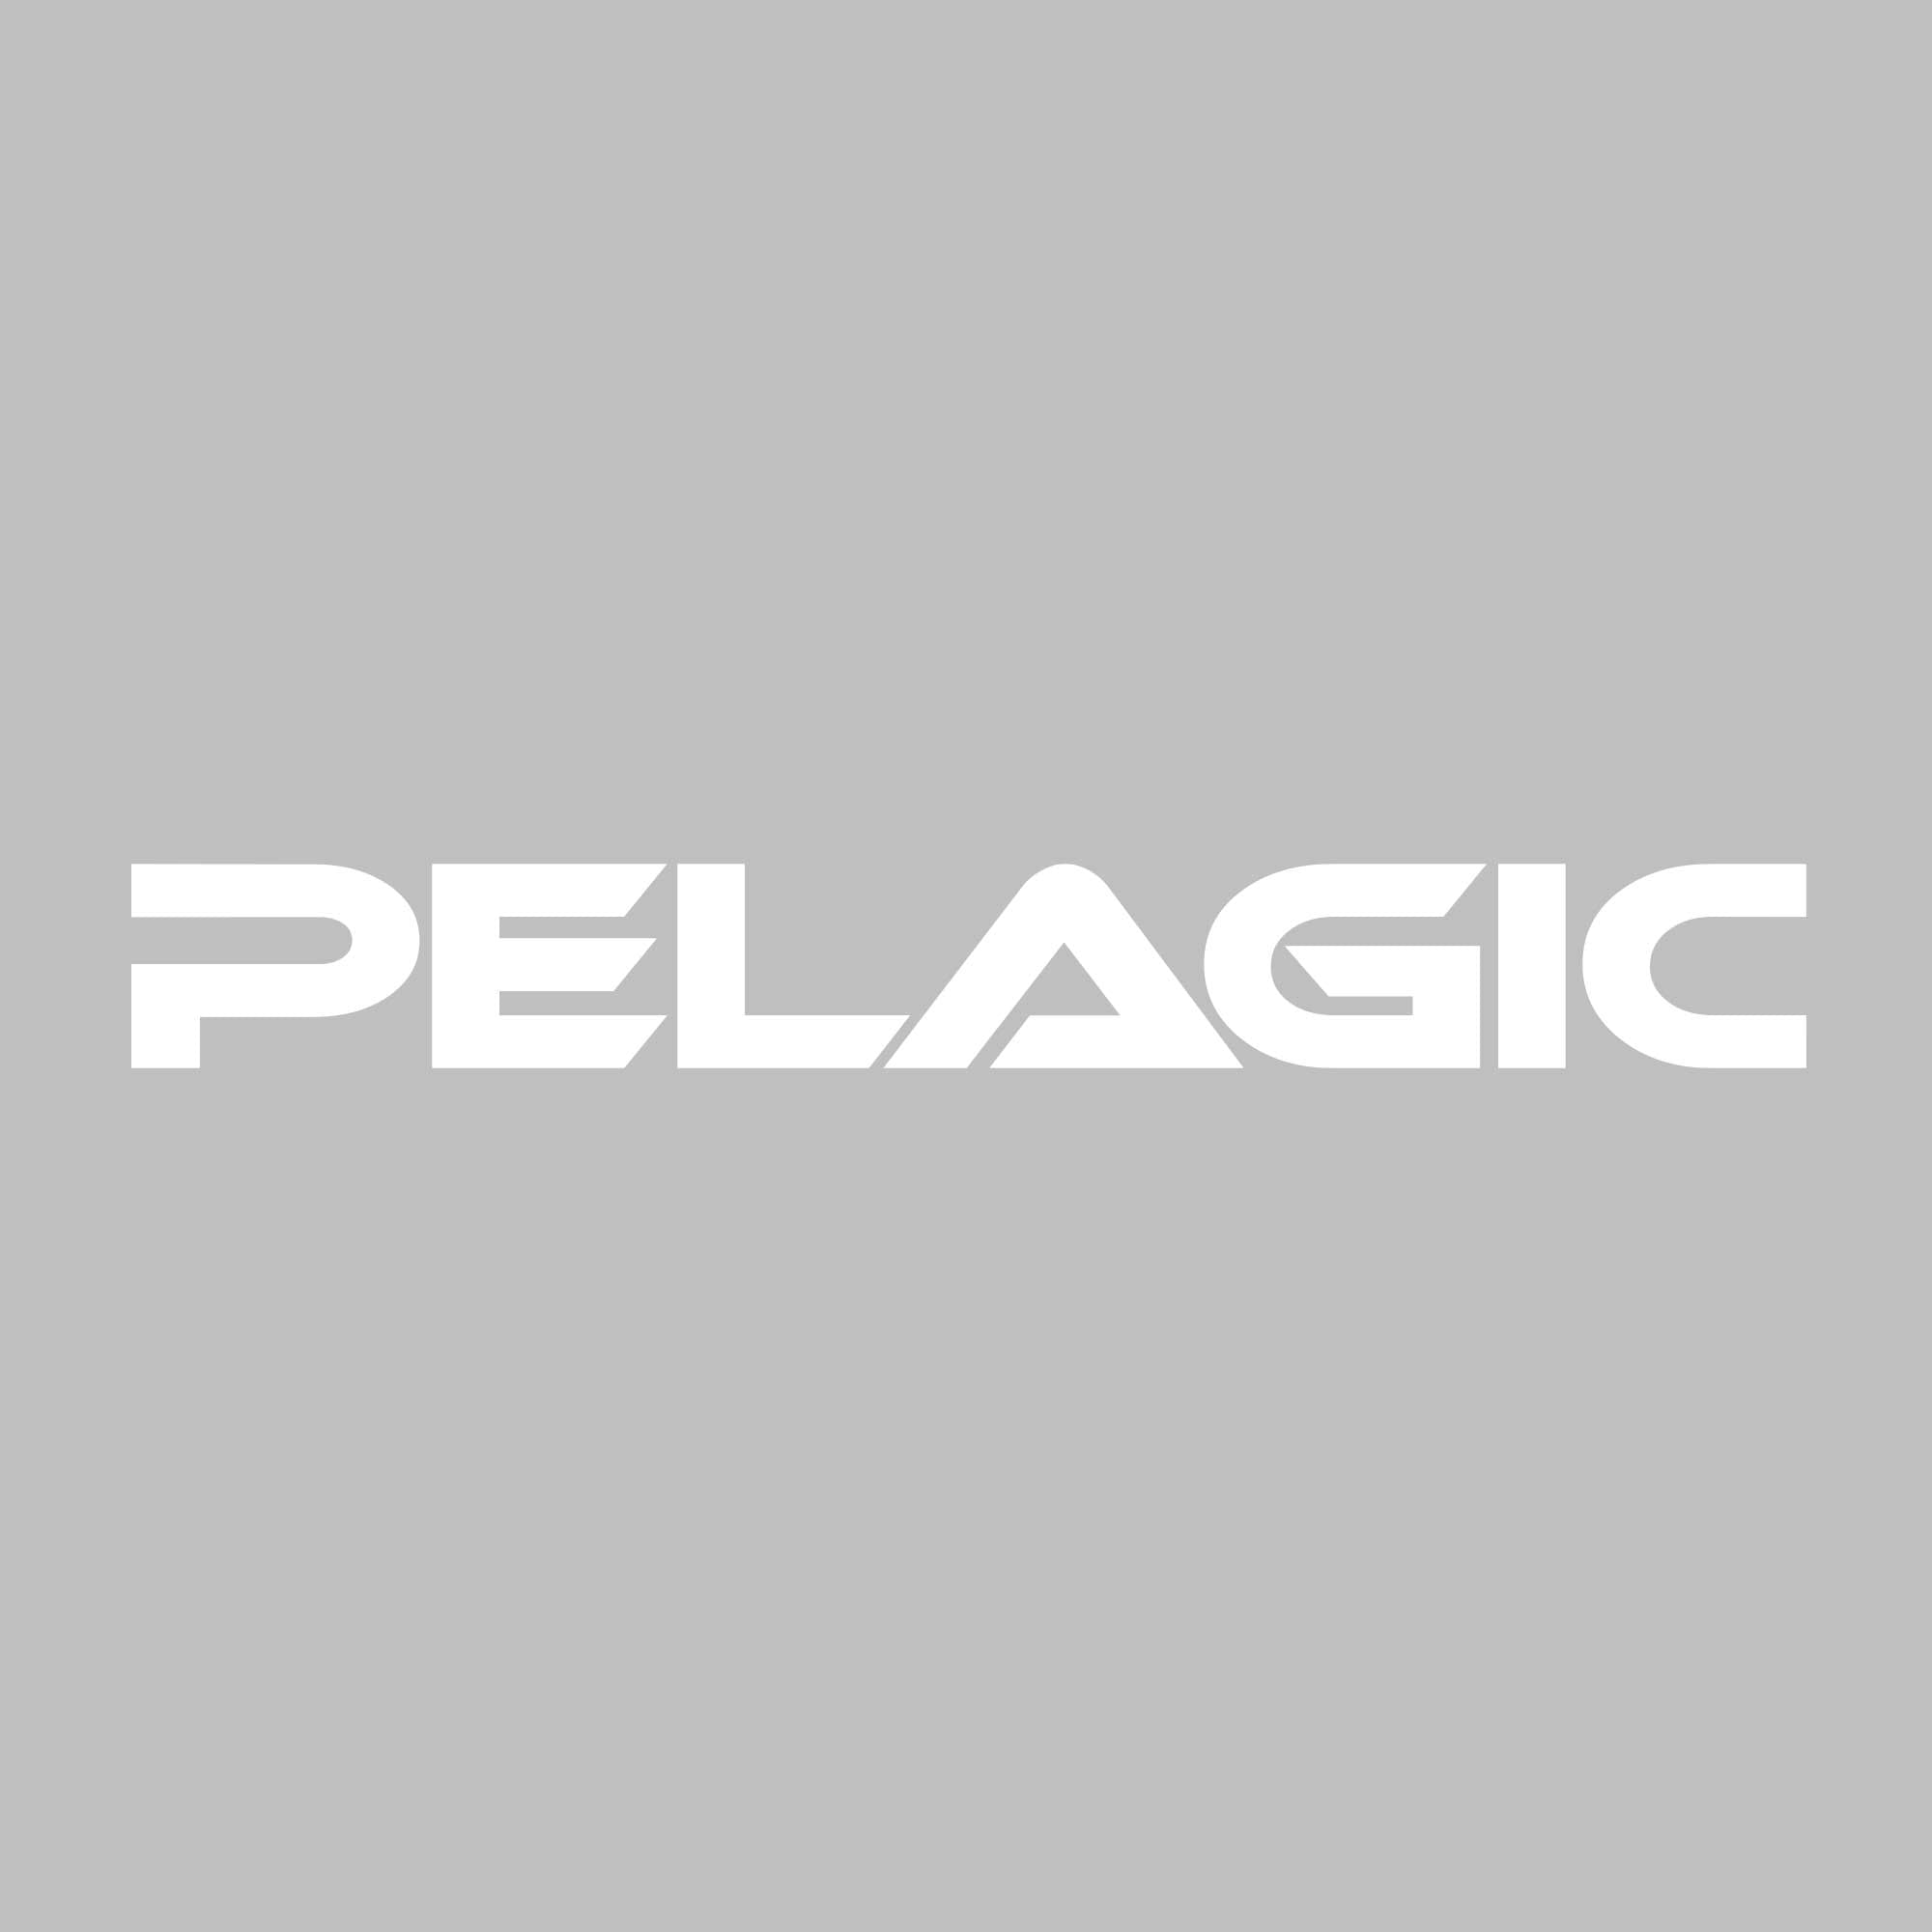 Pelagic Sportfishing Charters Logo Sticker/Decal Outdoor Approx 5